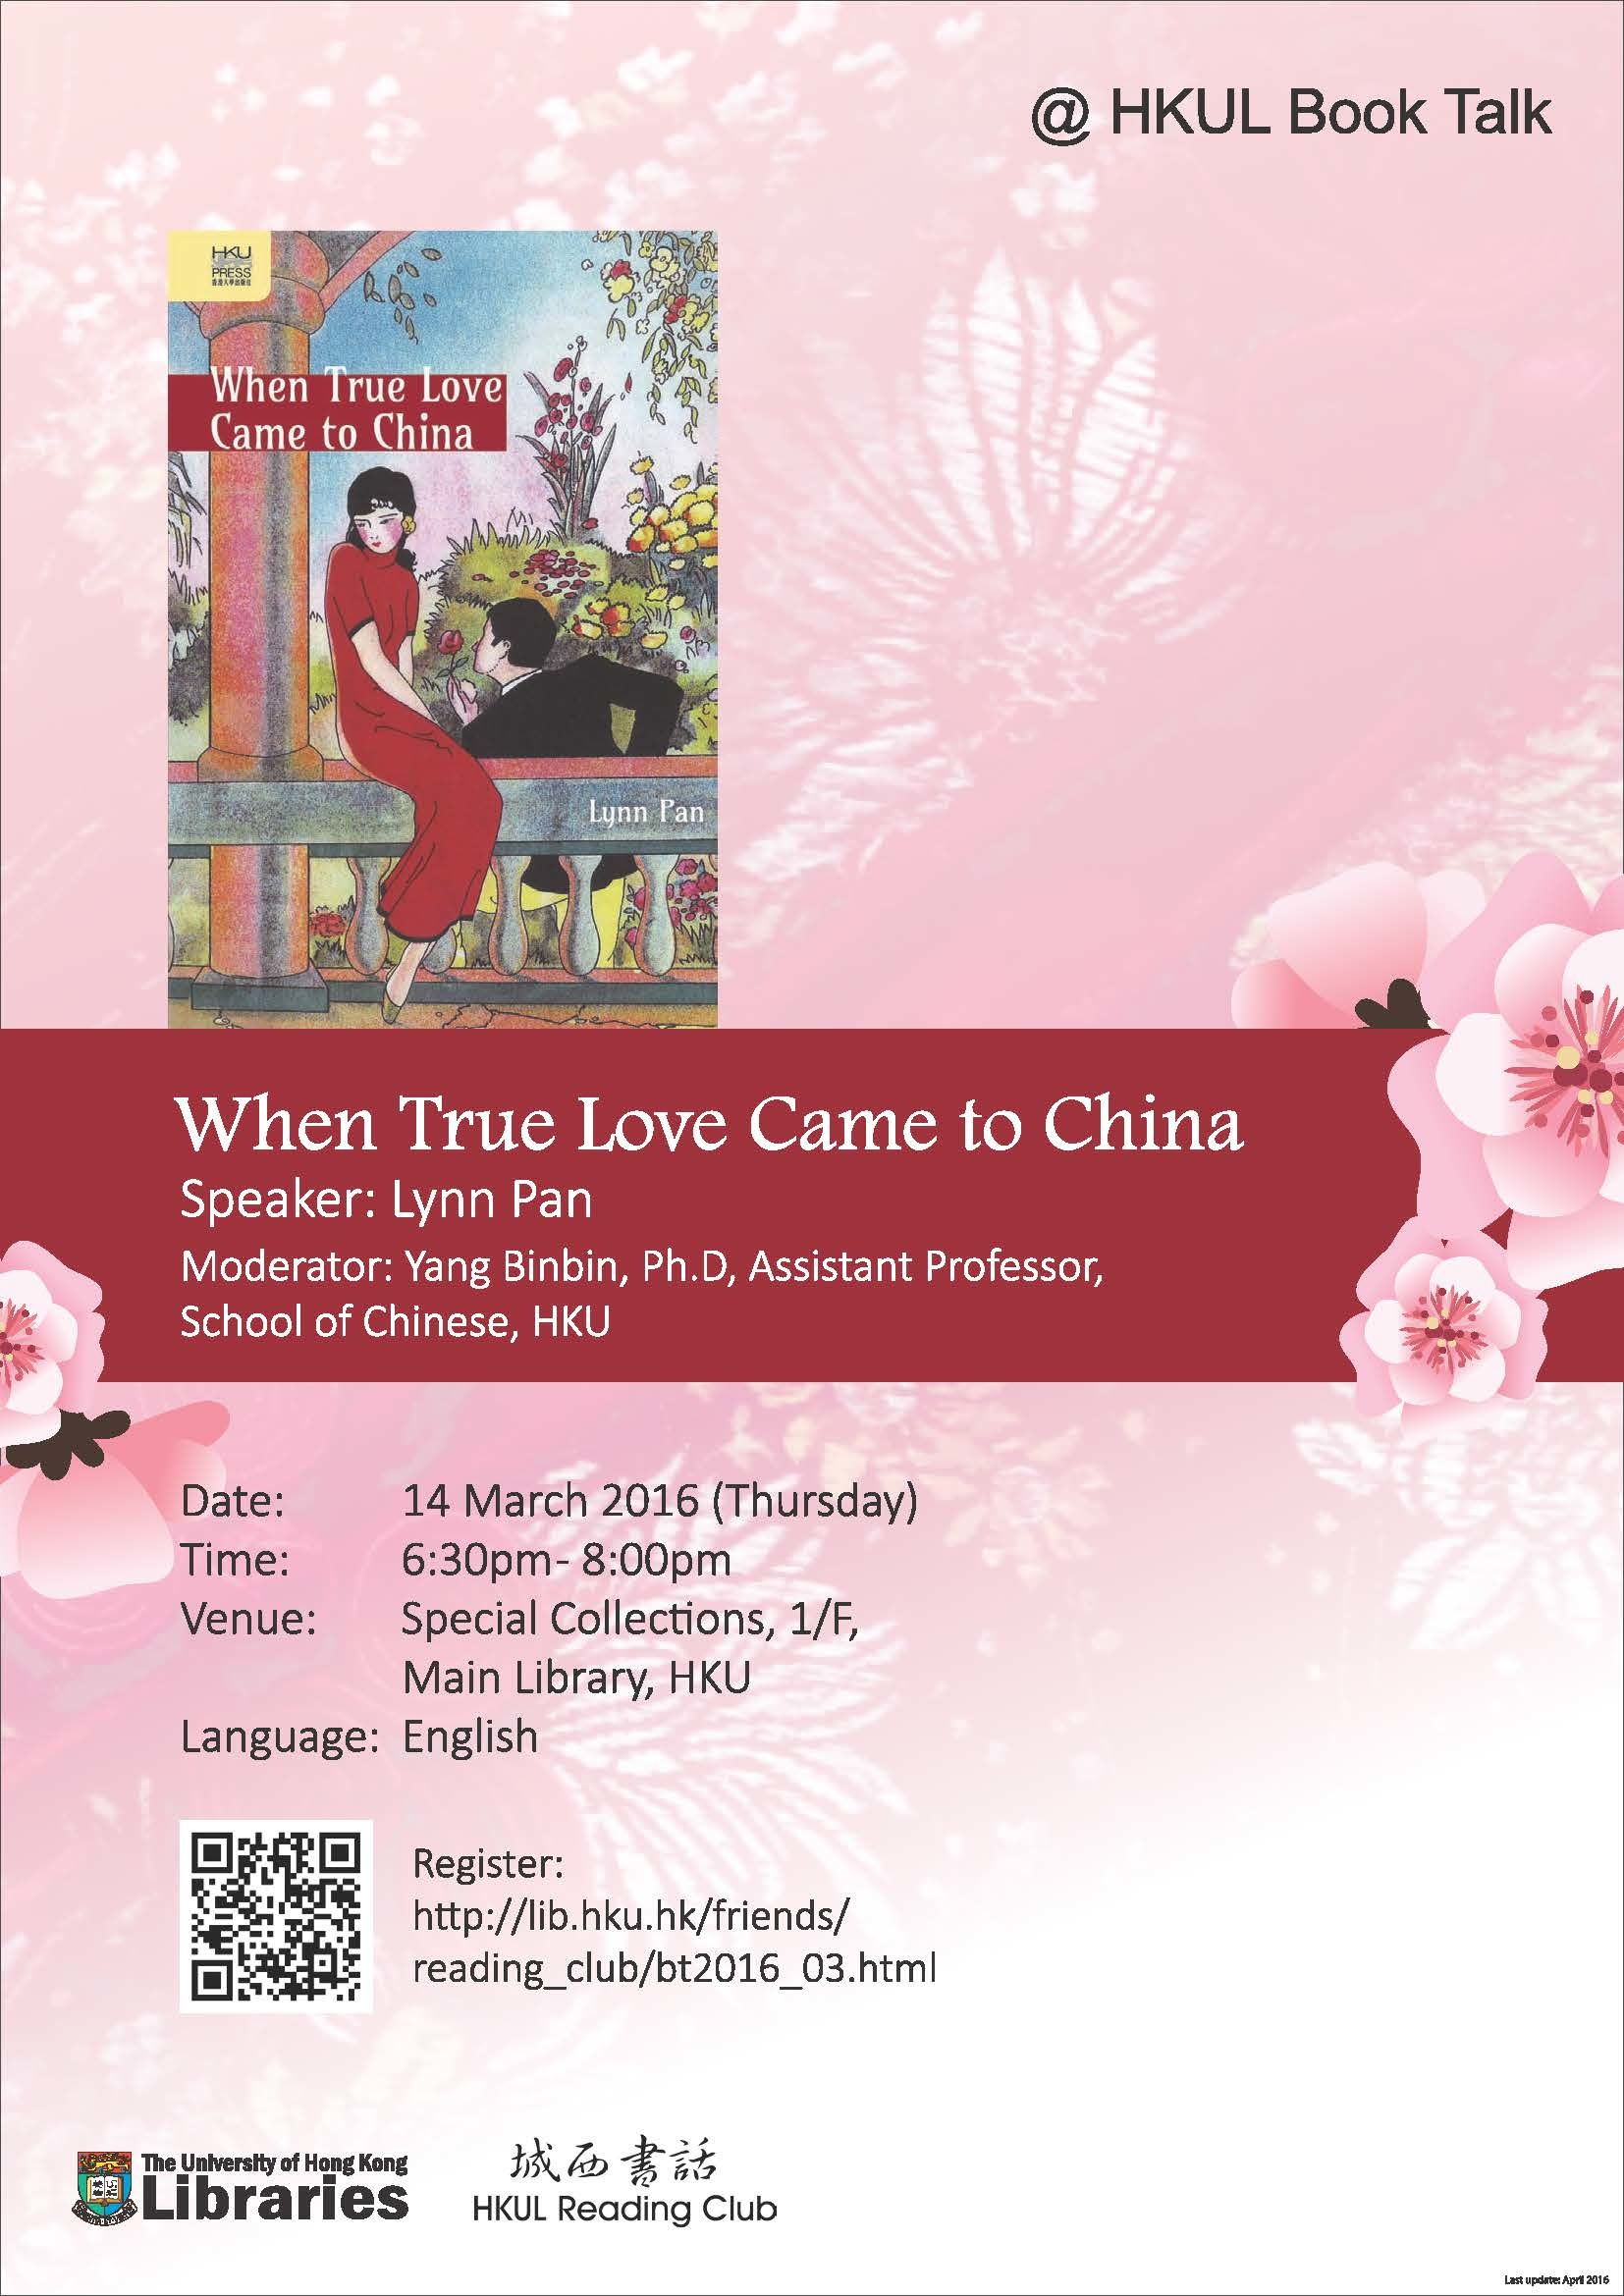 HKU Libraries Book Talk Series